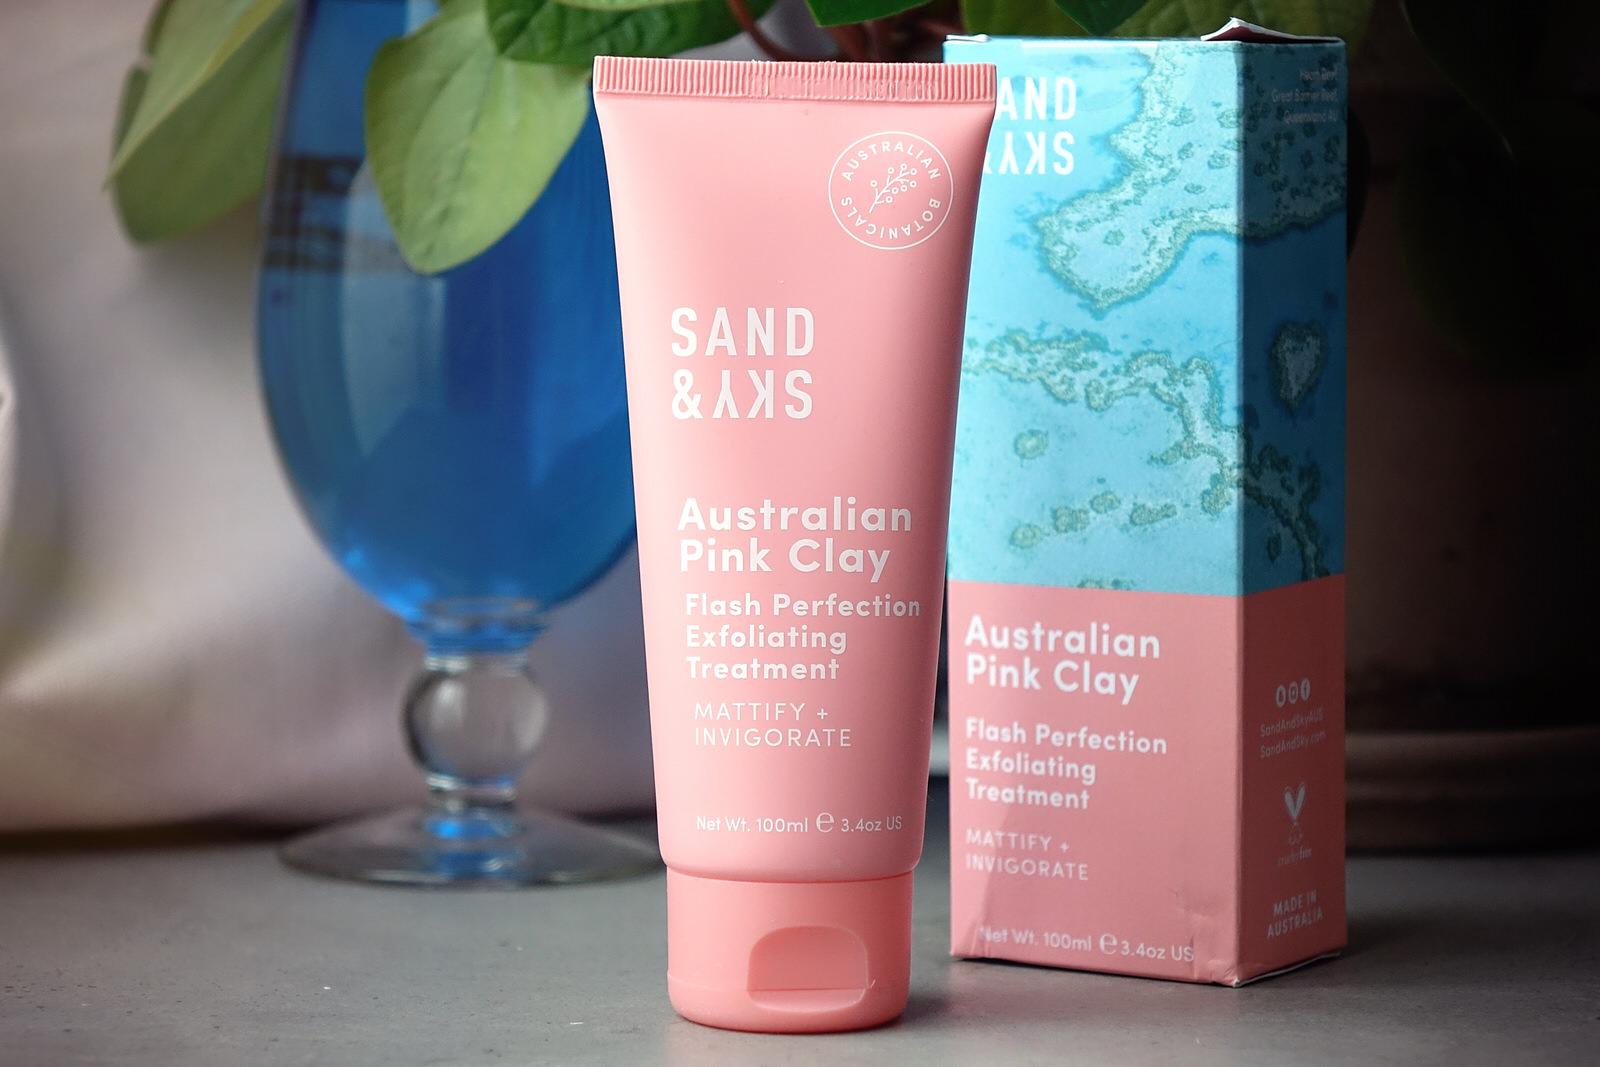 La gamme Australian Pink Clay de Sand and Sky